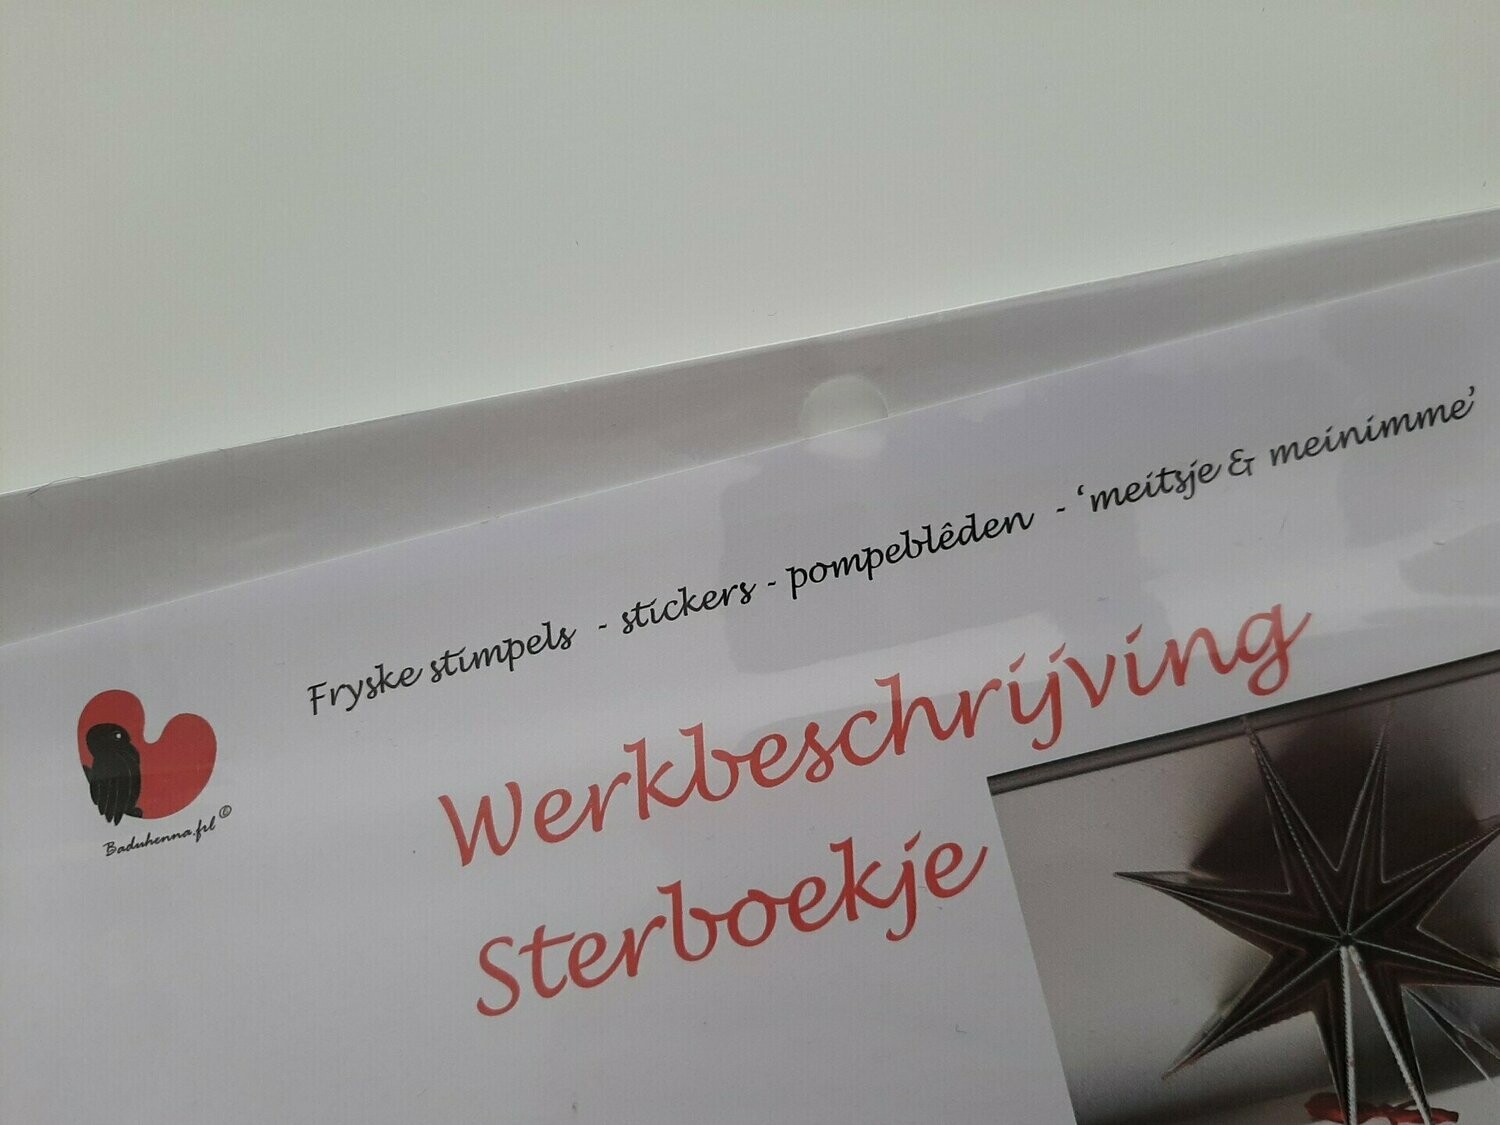 Pakket Stjerboekje / Pakket sterboekje/ Material DIY starbooklet